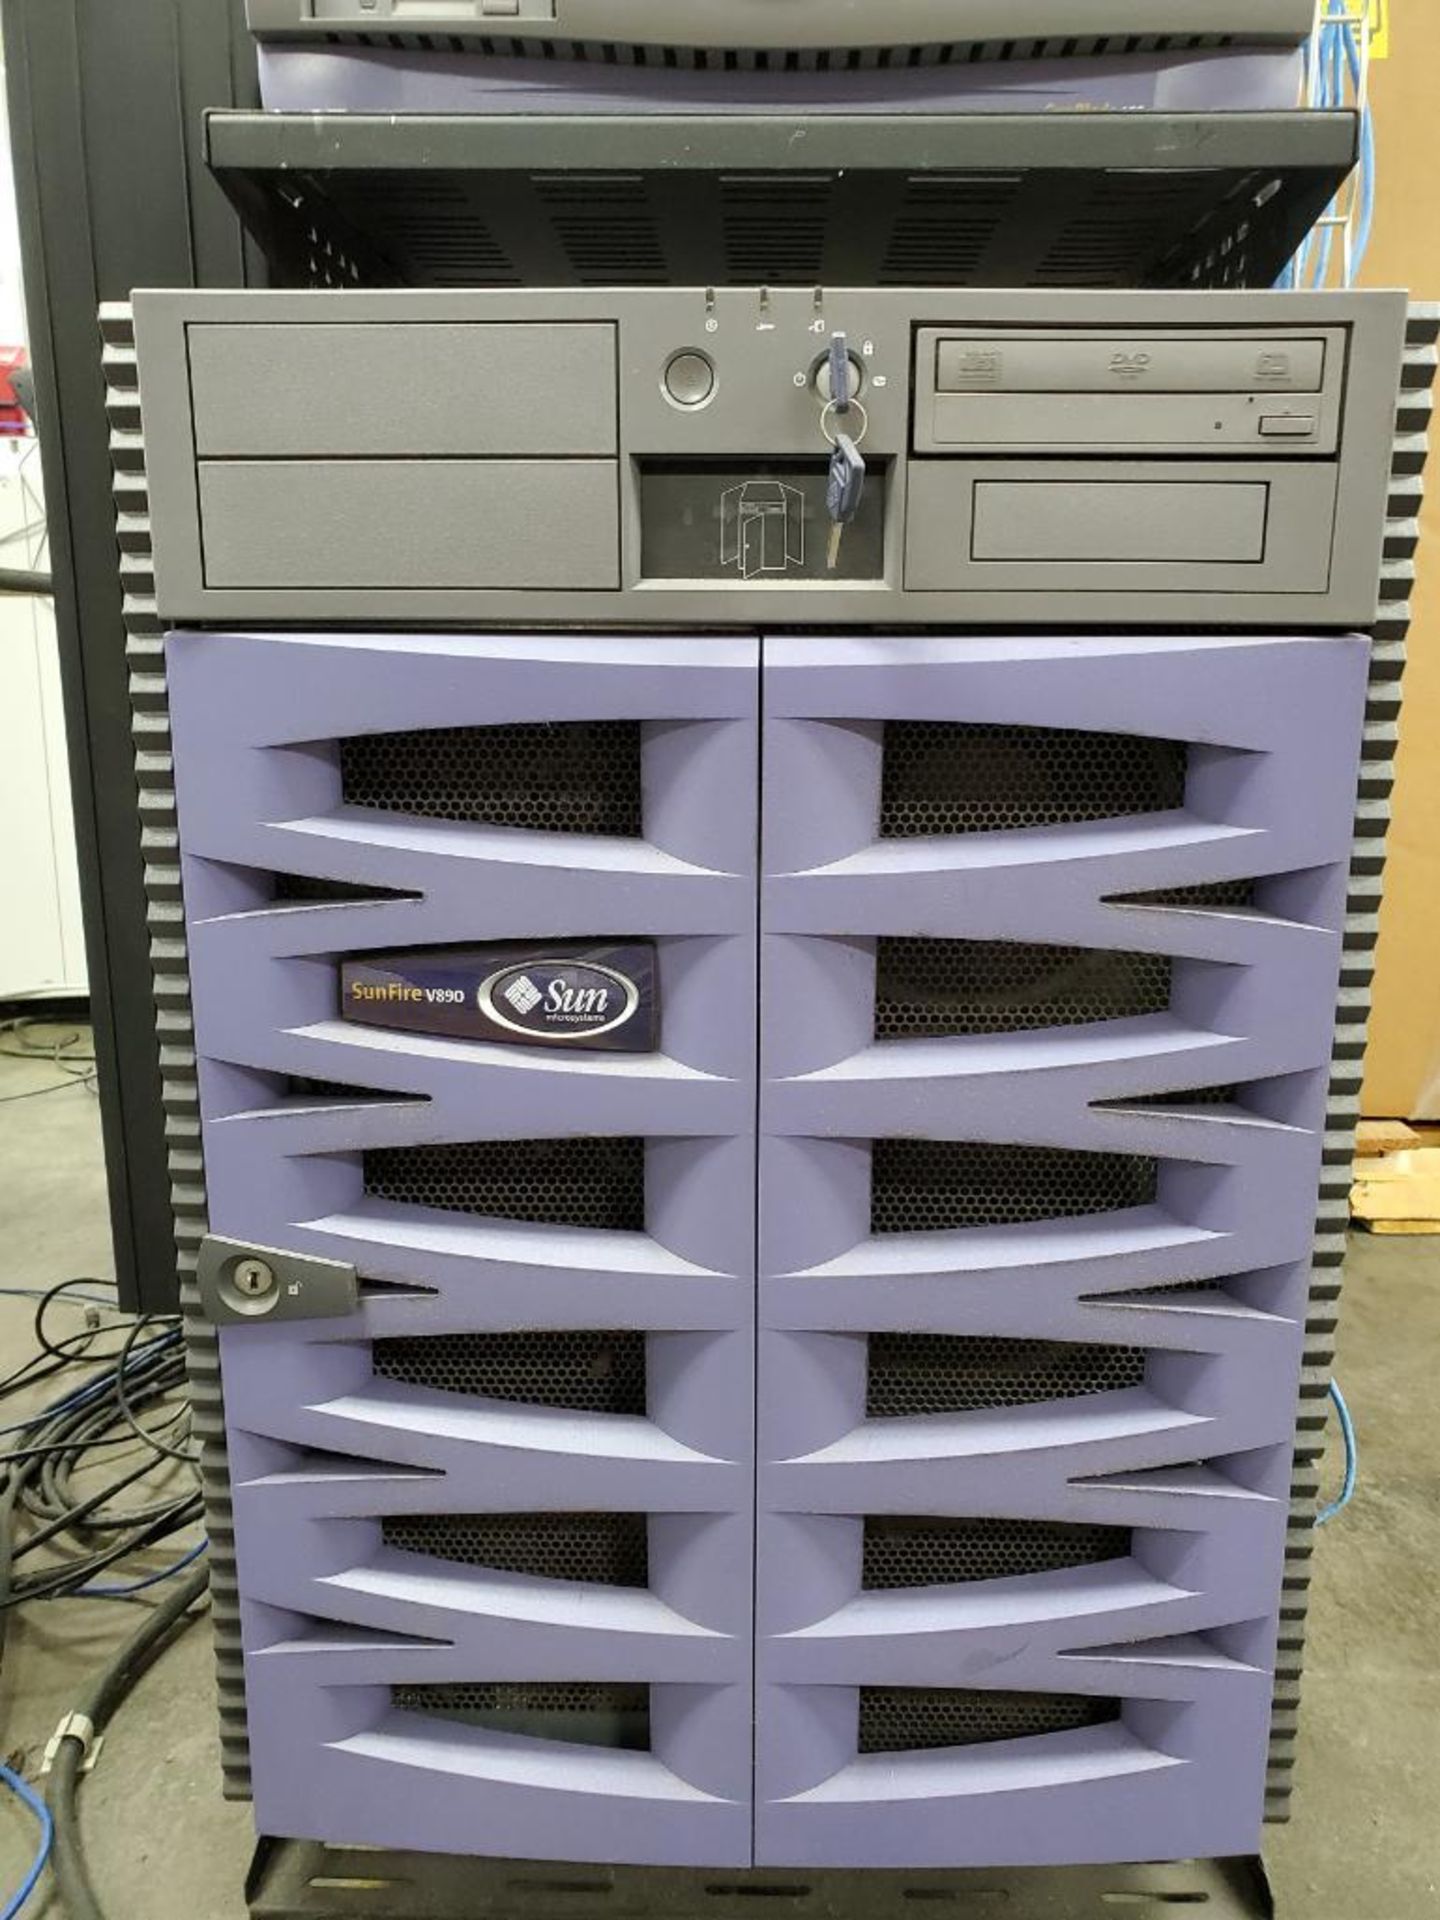 Sun Fire Microsystems V890 Printer Server w/ Sunblade 150 Cd/Disk Drive - Image 4 of 7